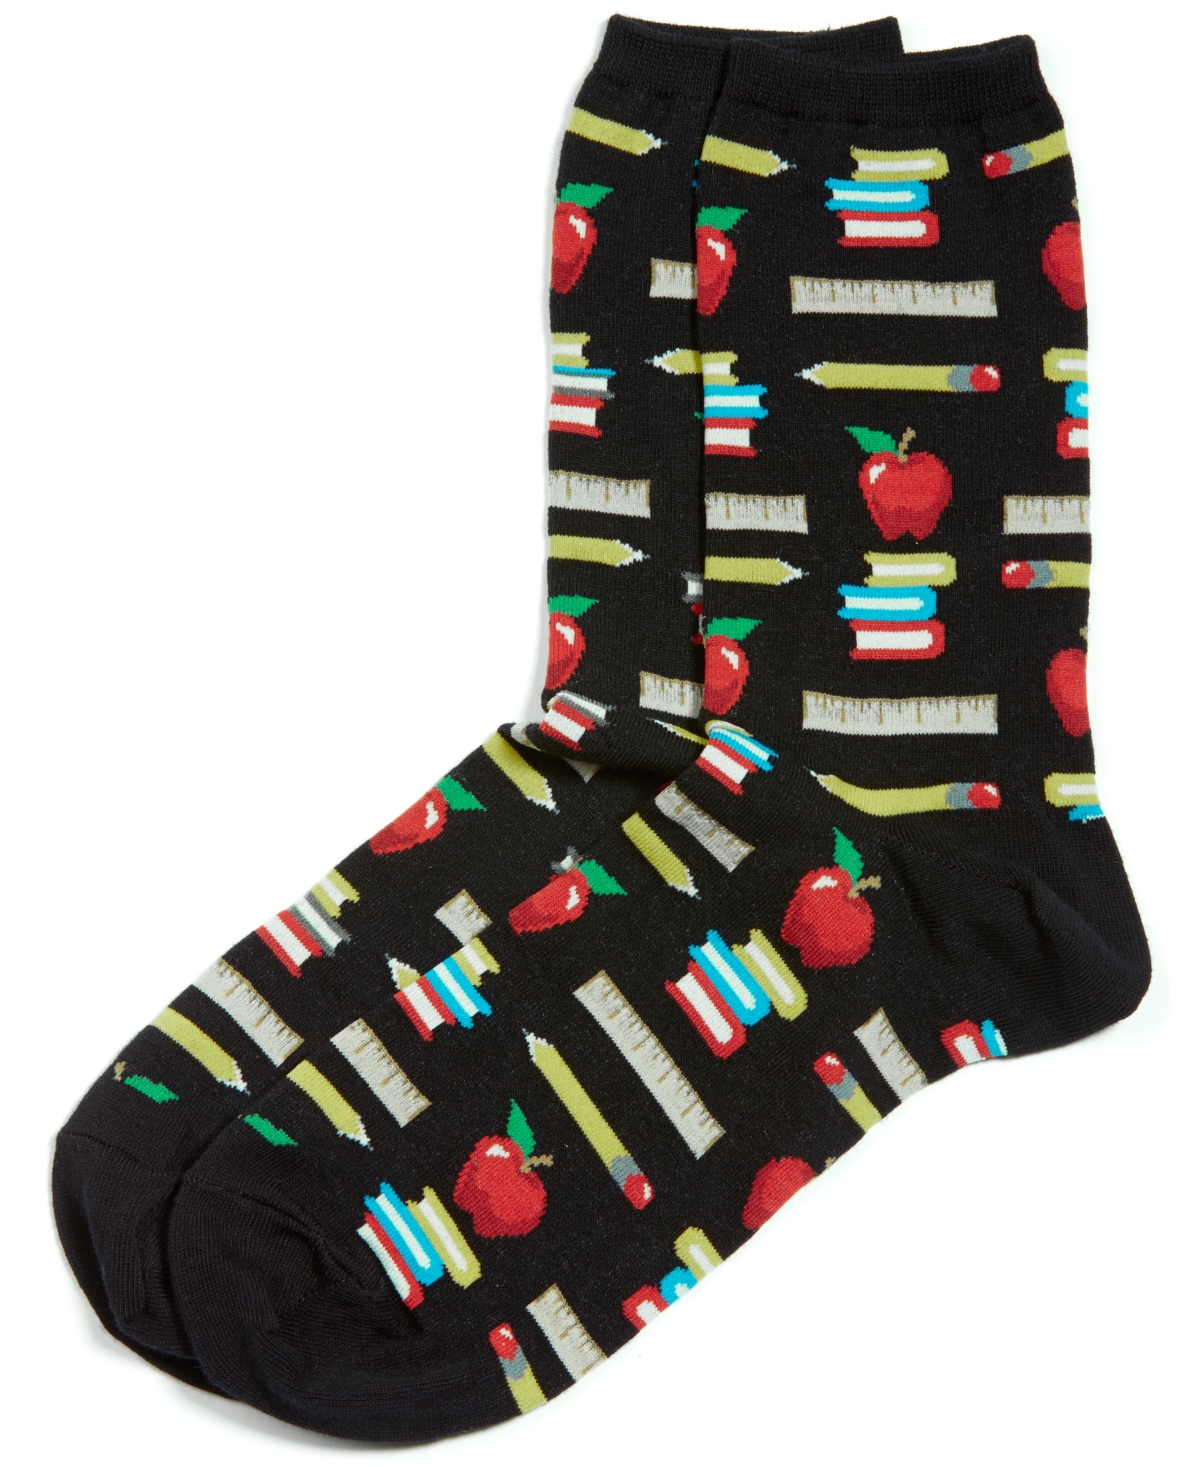 Women's Teacher's Pet Fashion Crew Socks - BLACK